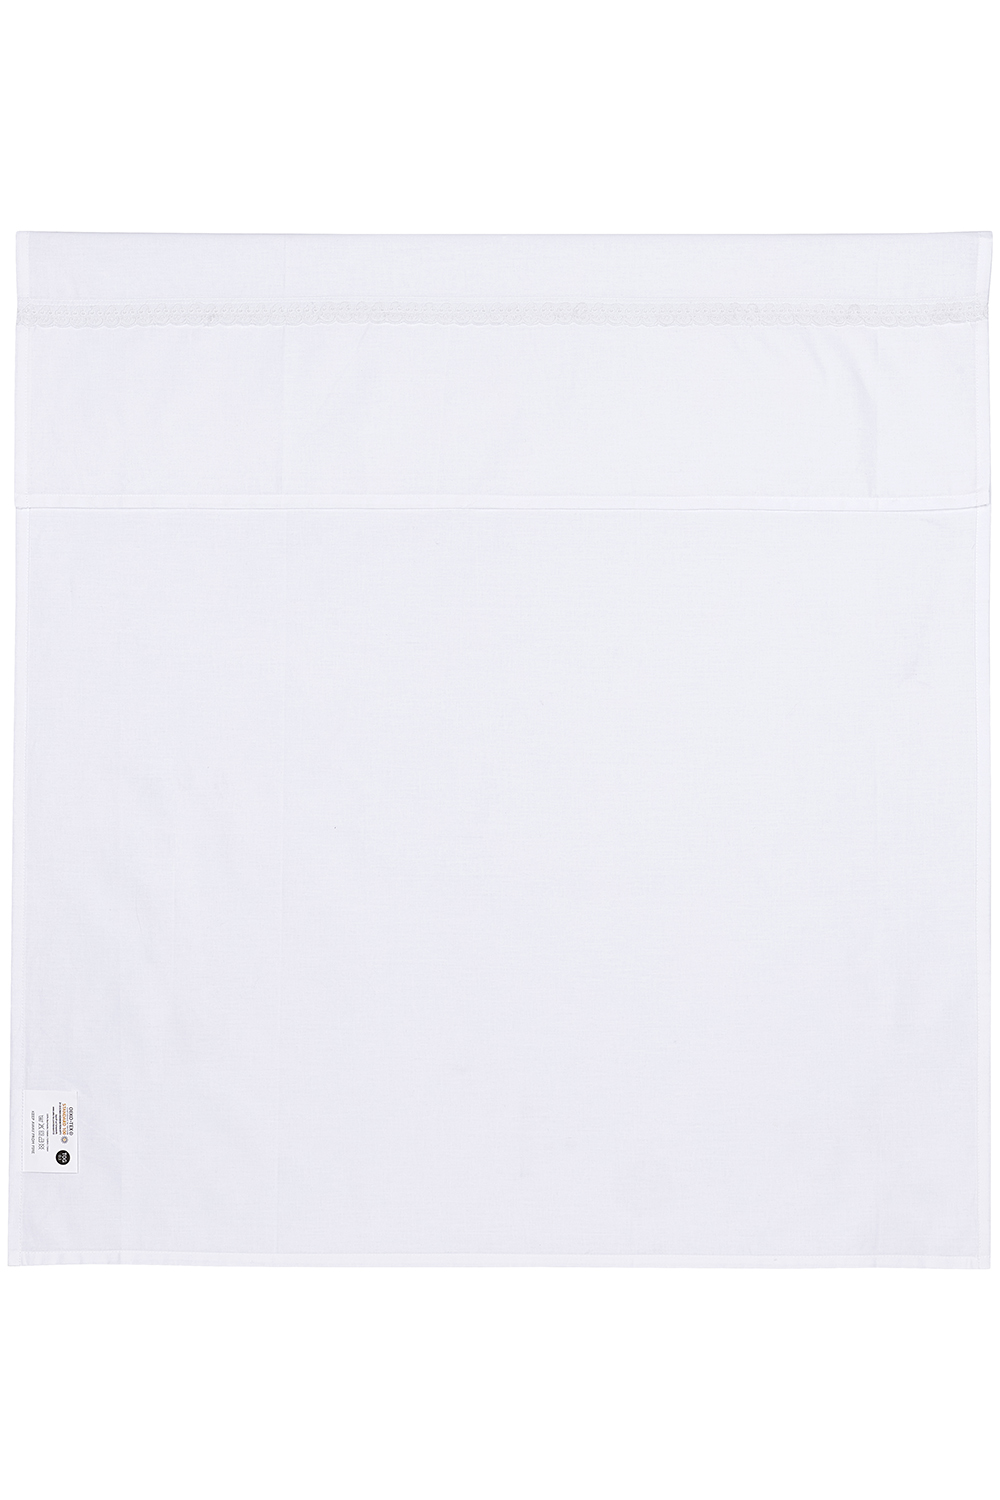 Wieglaken Lace - White - 75x100cm